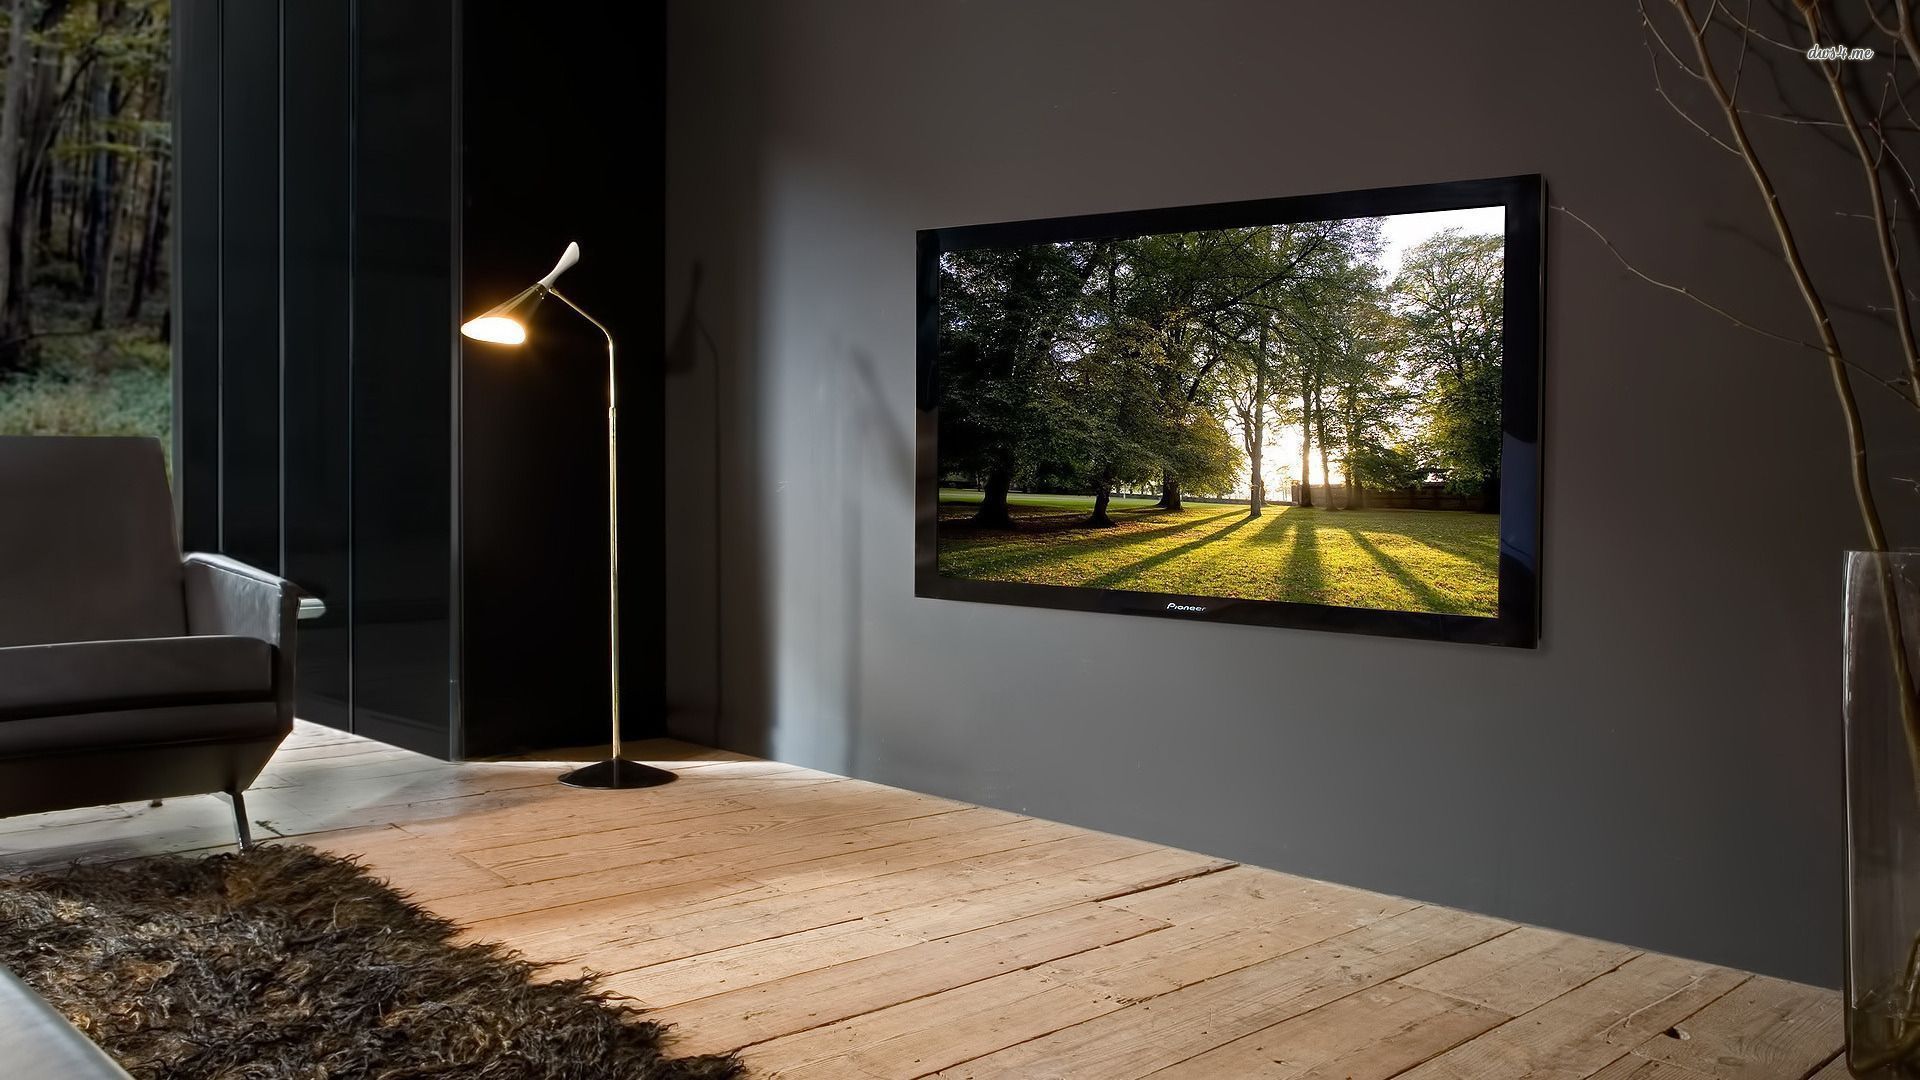 Pioneer HD TV in the living room wallpaper - Digital Art ...